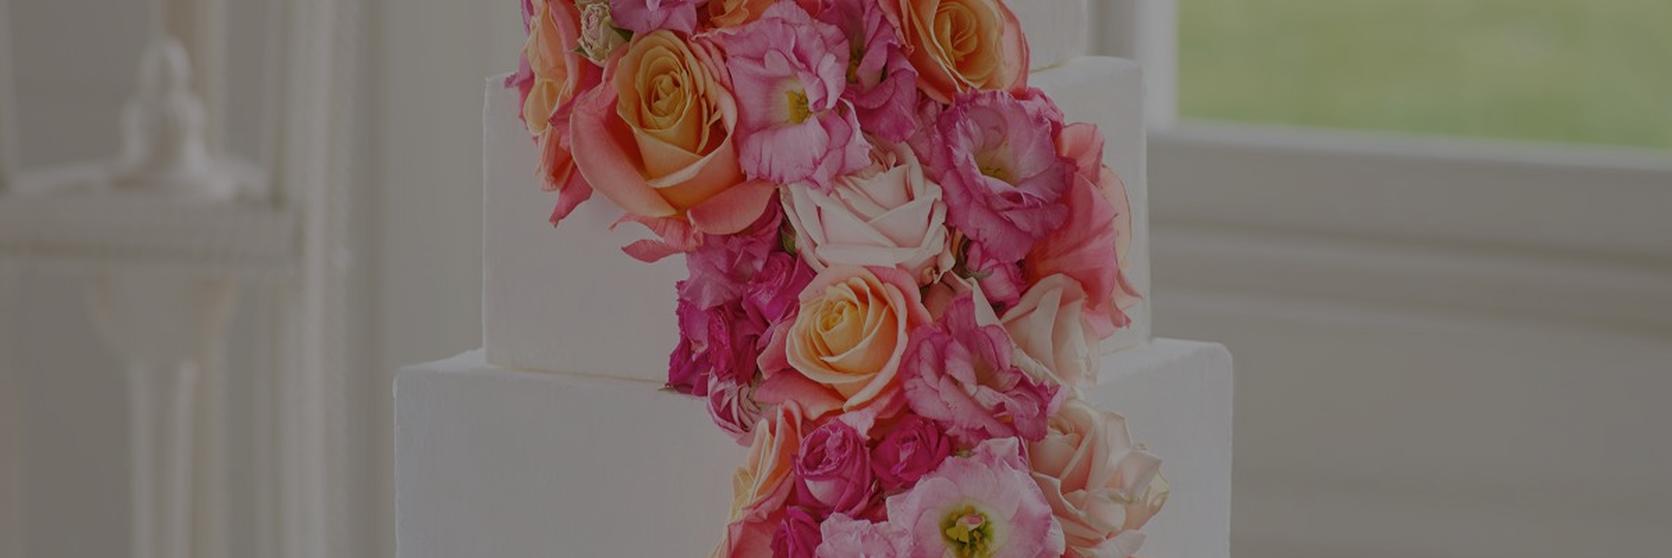 wedding-cake-white-pink-roses-floral-decoration